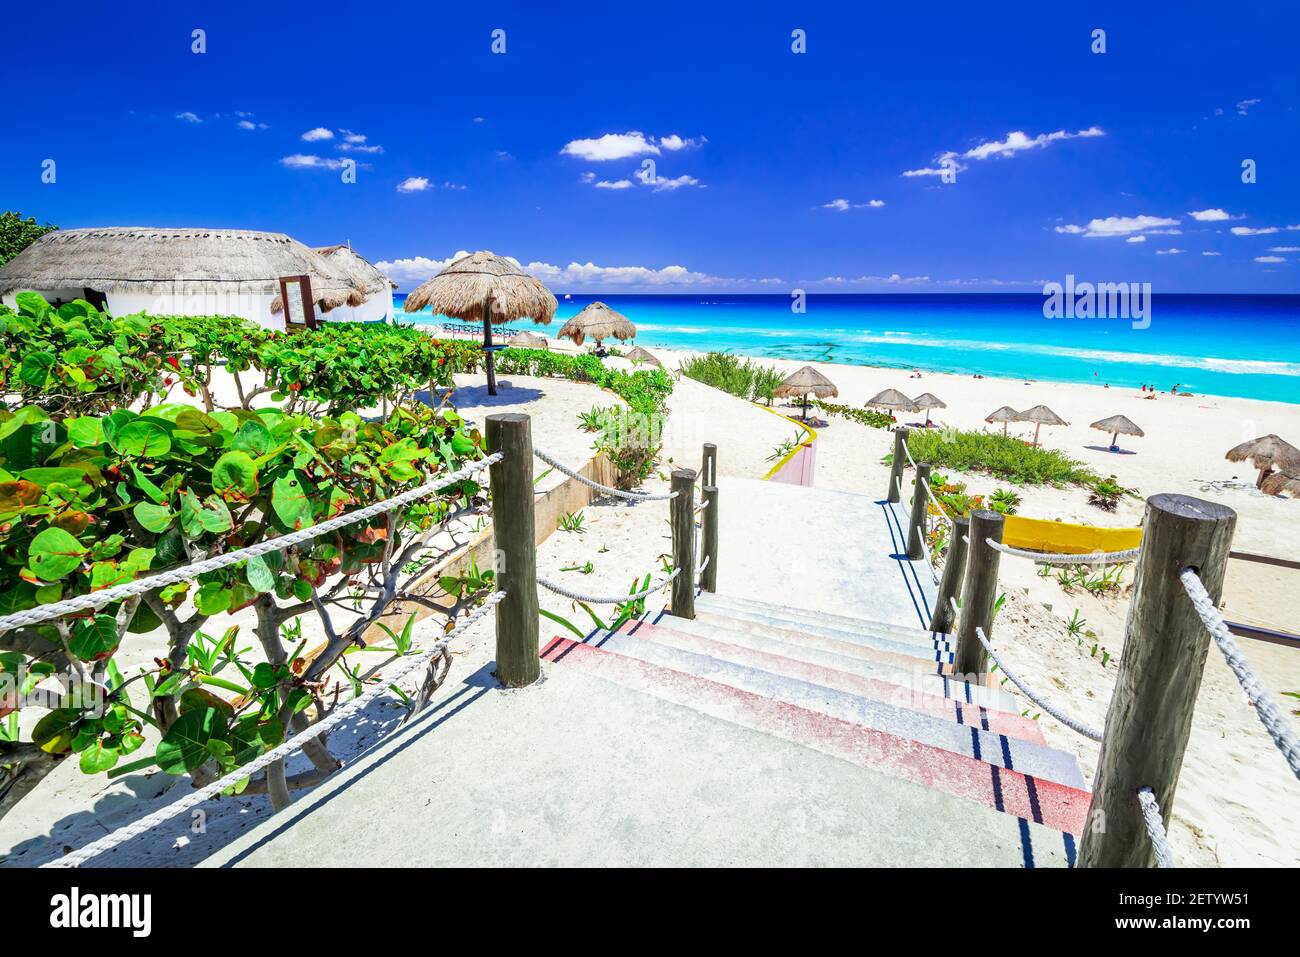 Cancun, Mexico. Tropical landscape with Caribbean Sea beach, Central America travel destination. Stock Photo